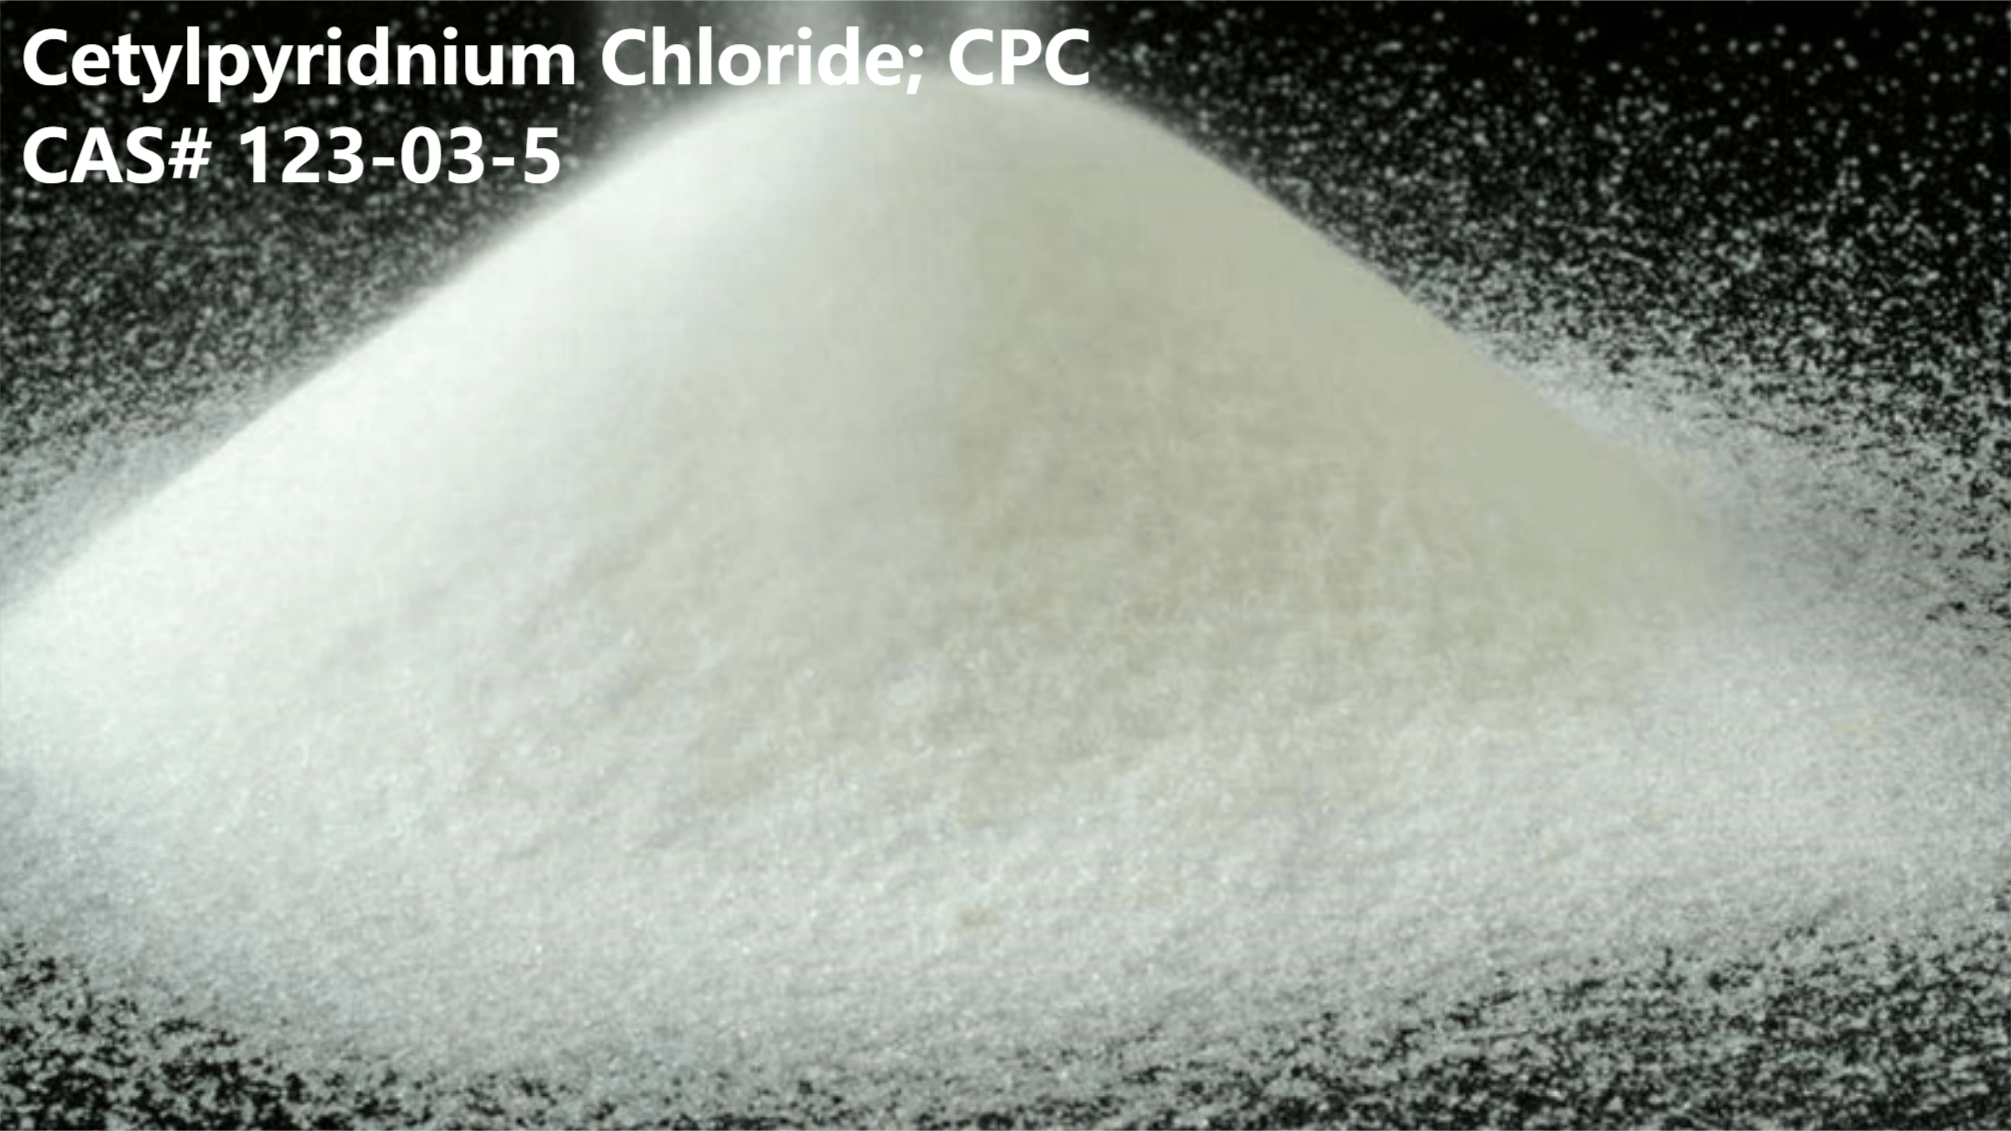 Cetylpyridnium Chloride - CPC